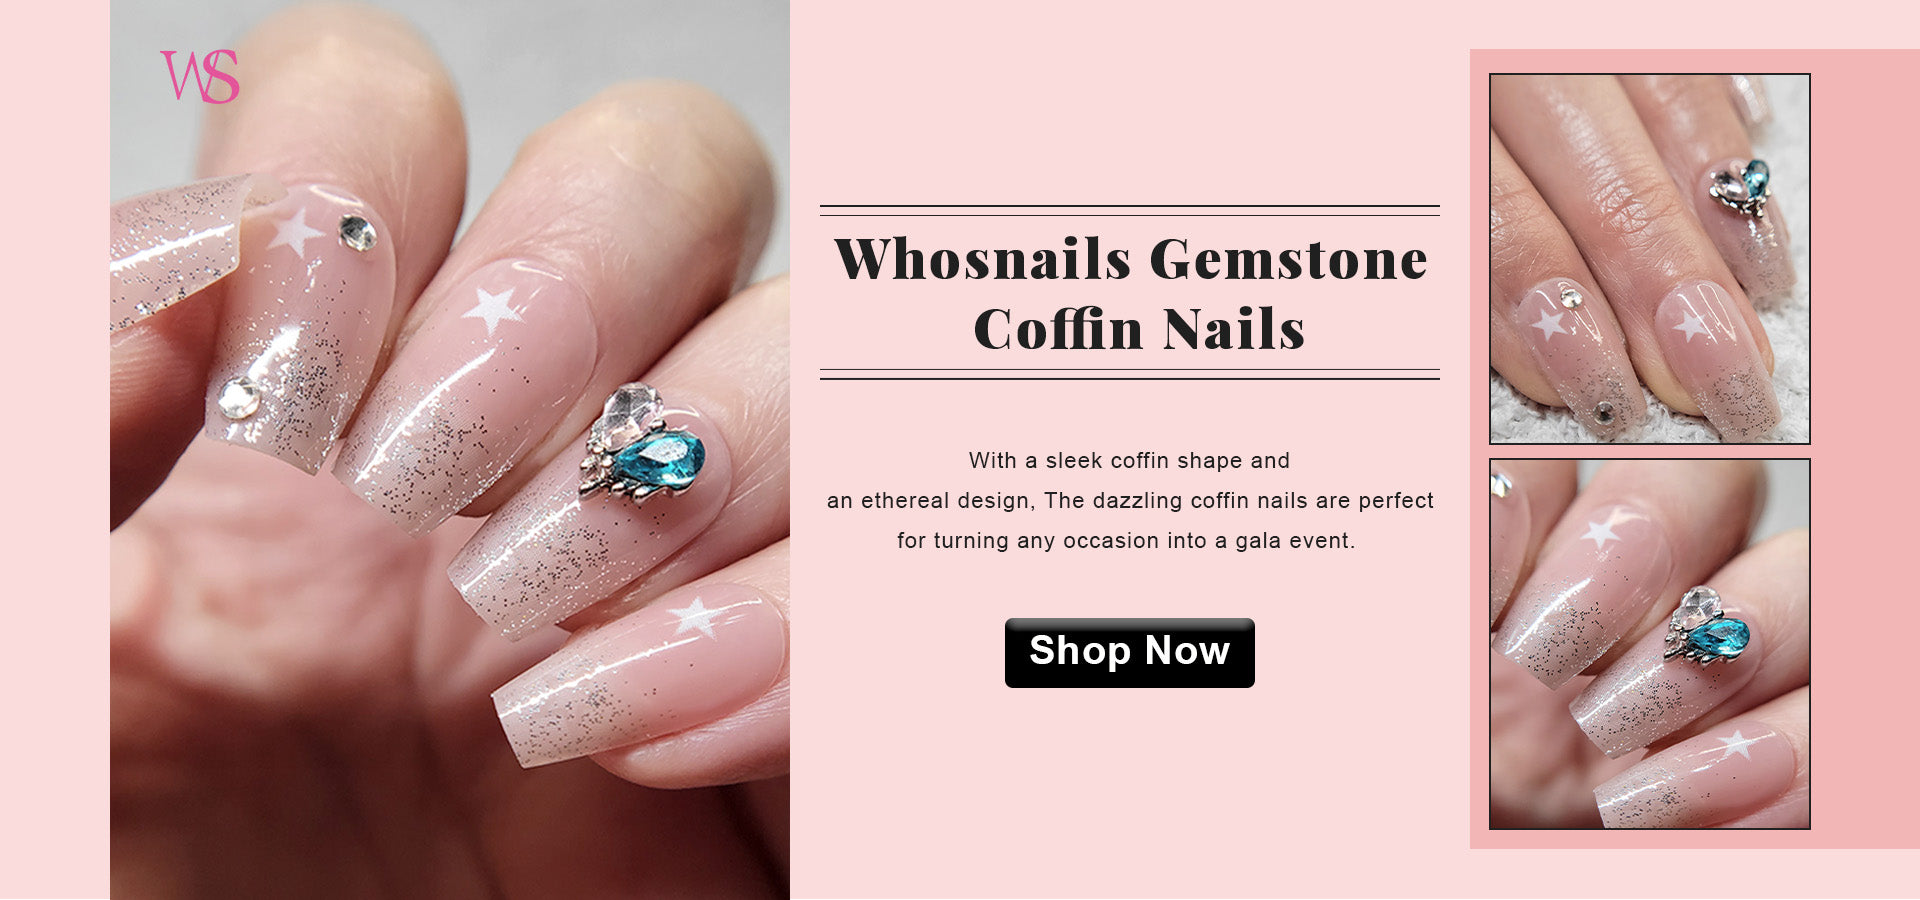 whosnails gemstone coffin nails banner